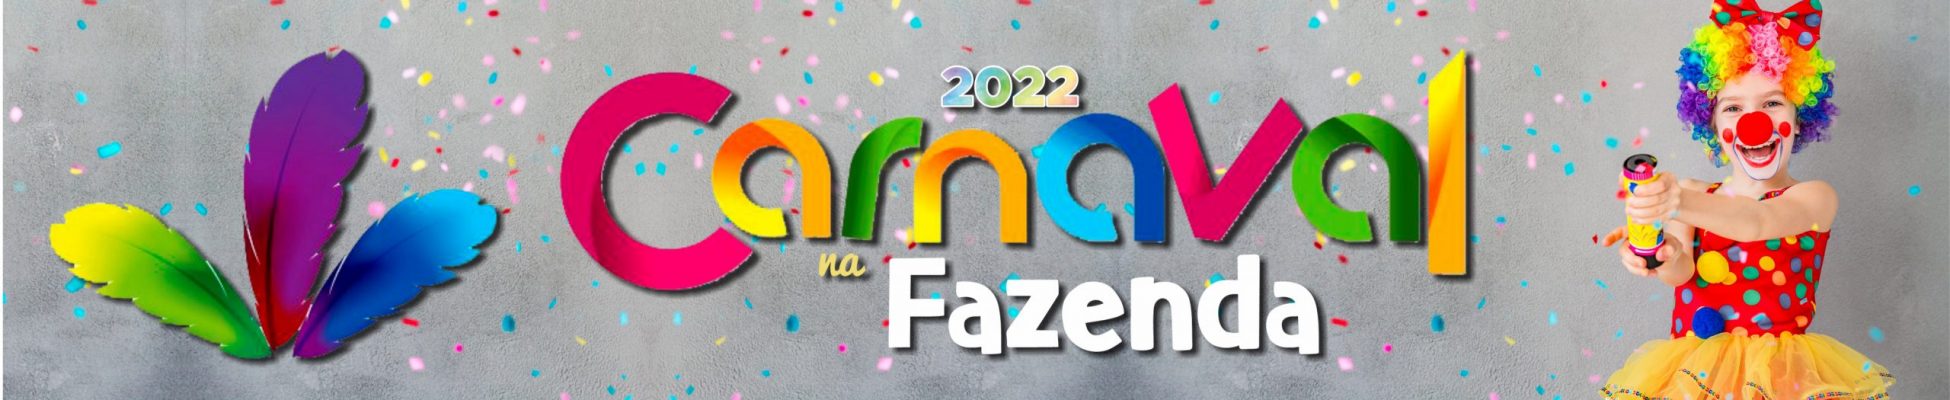 Carnaval 2022.1